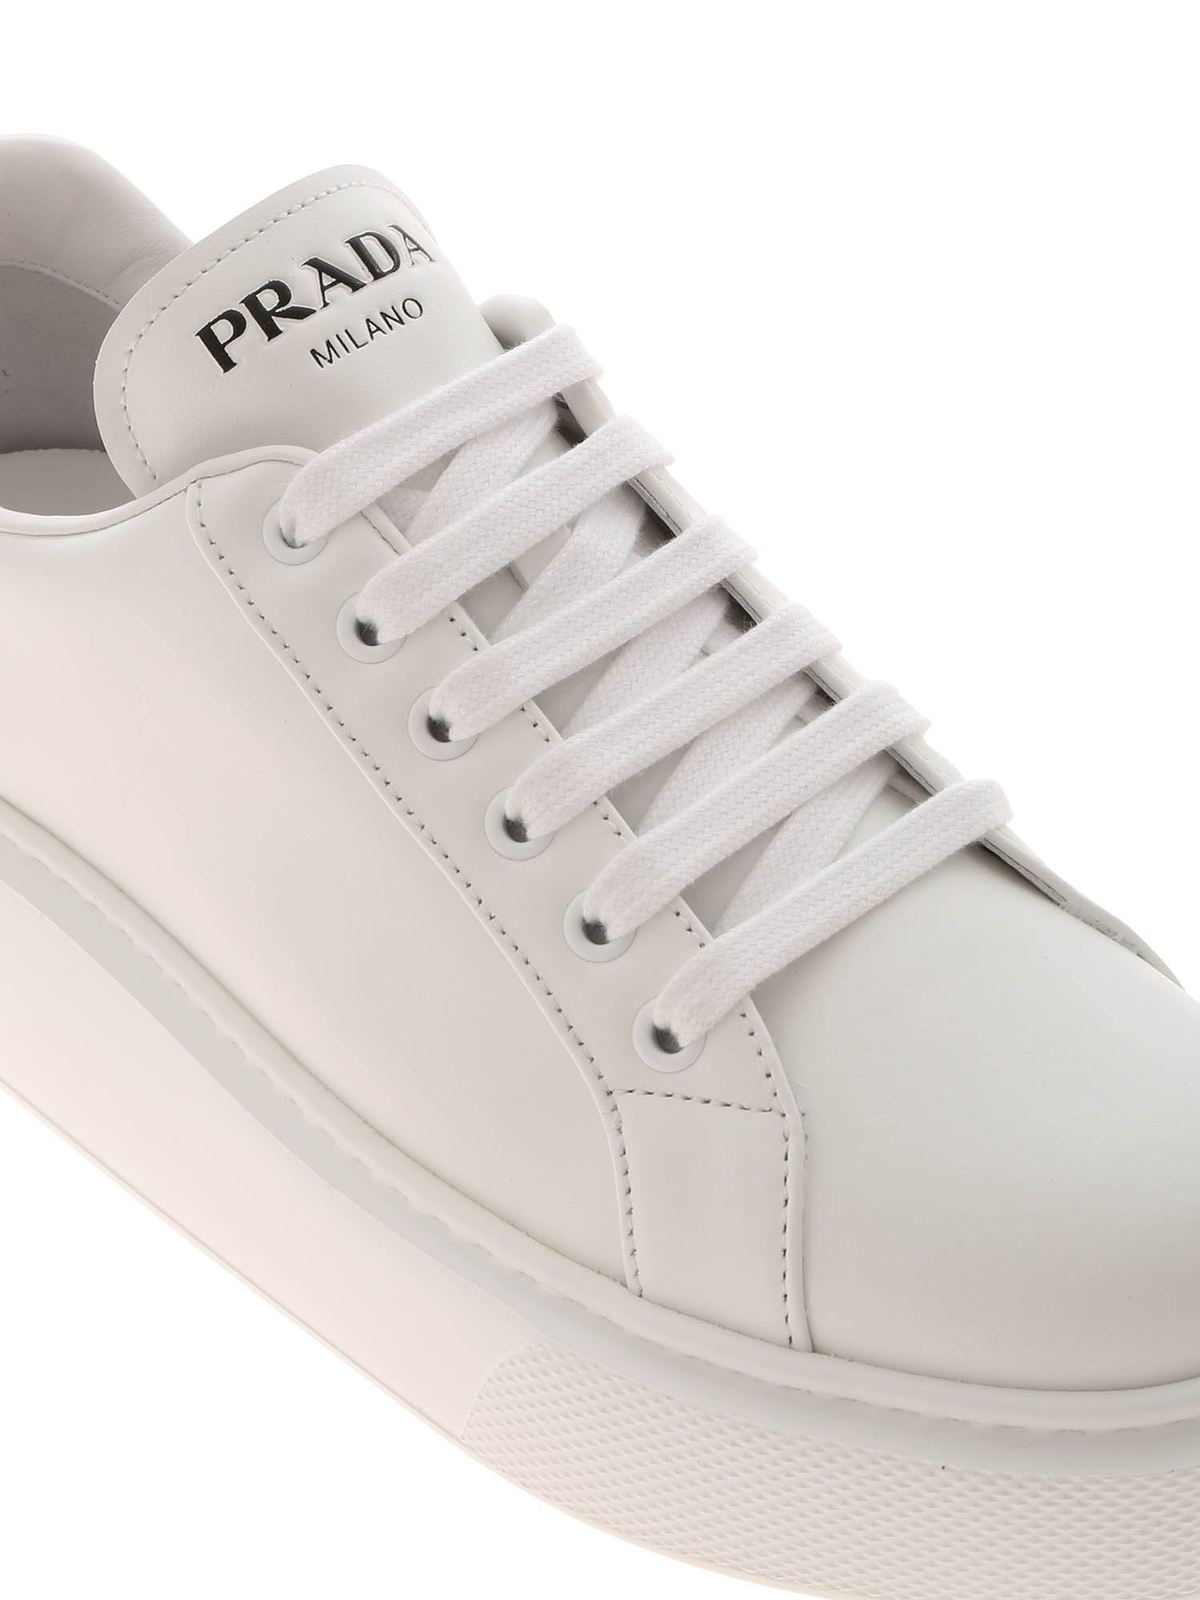 prada white tennis shoes